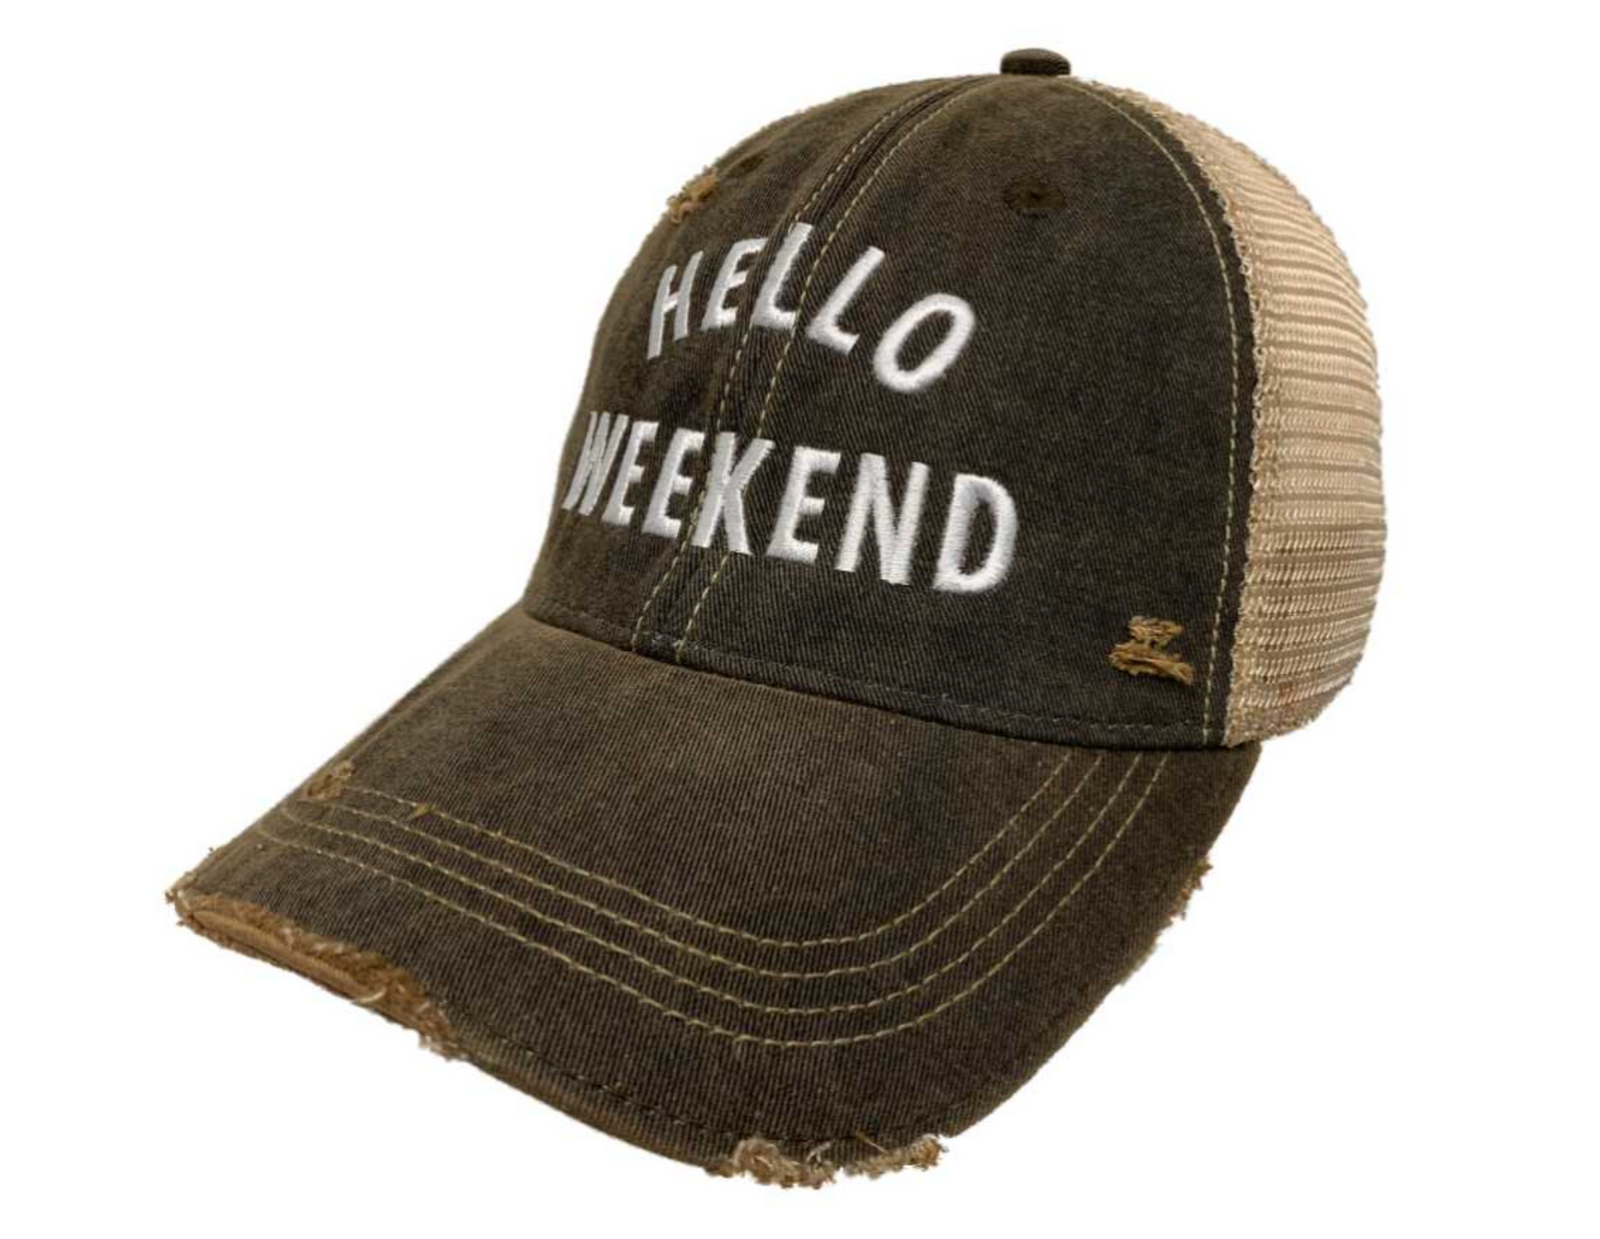 Hello Weekend Snapback Vintage Trucker Cap